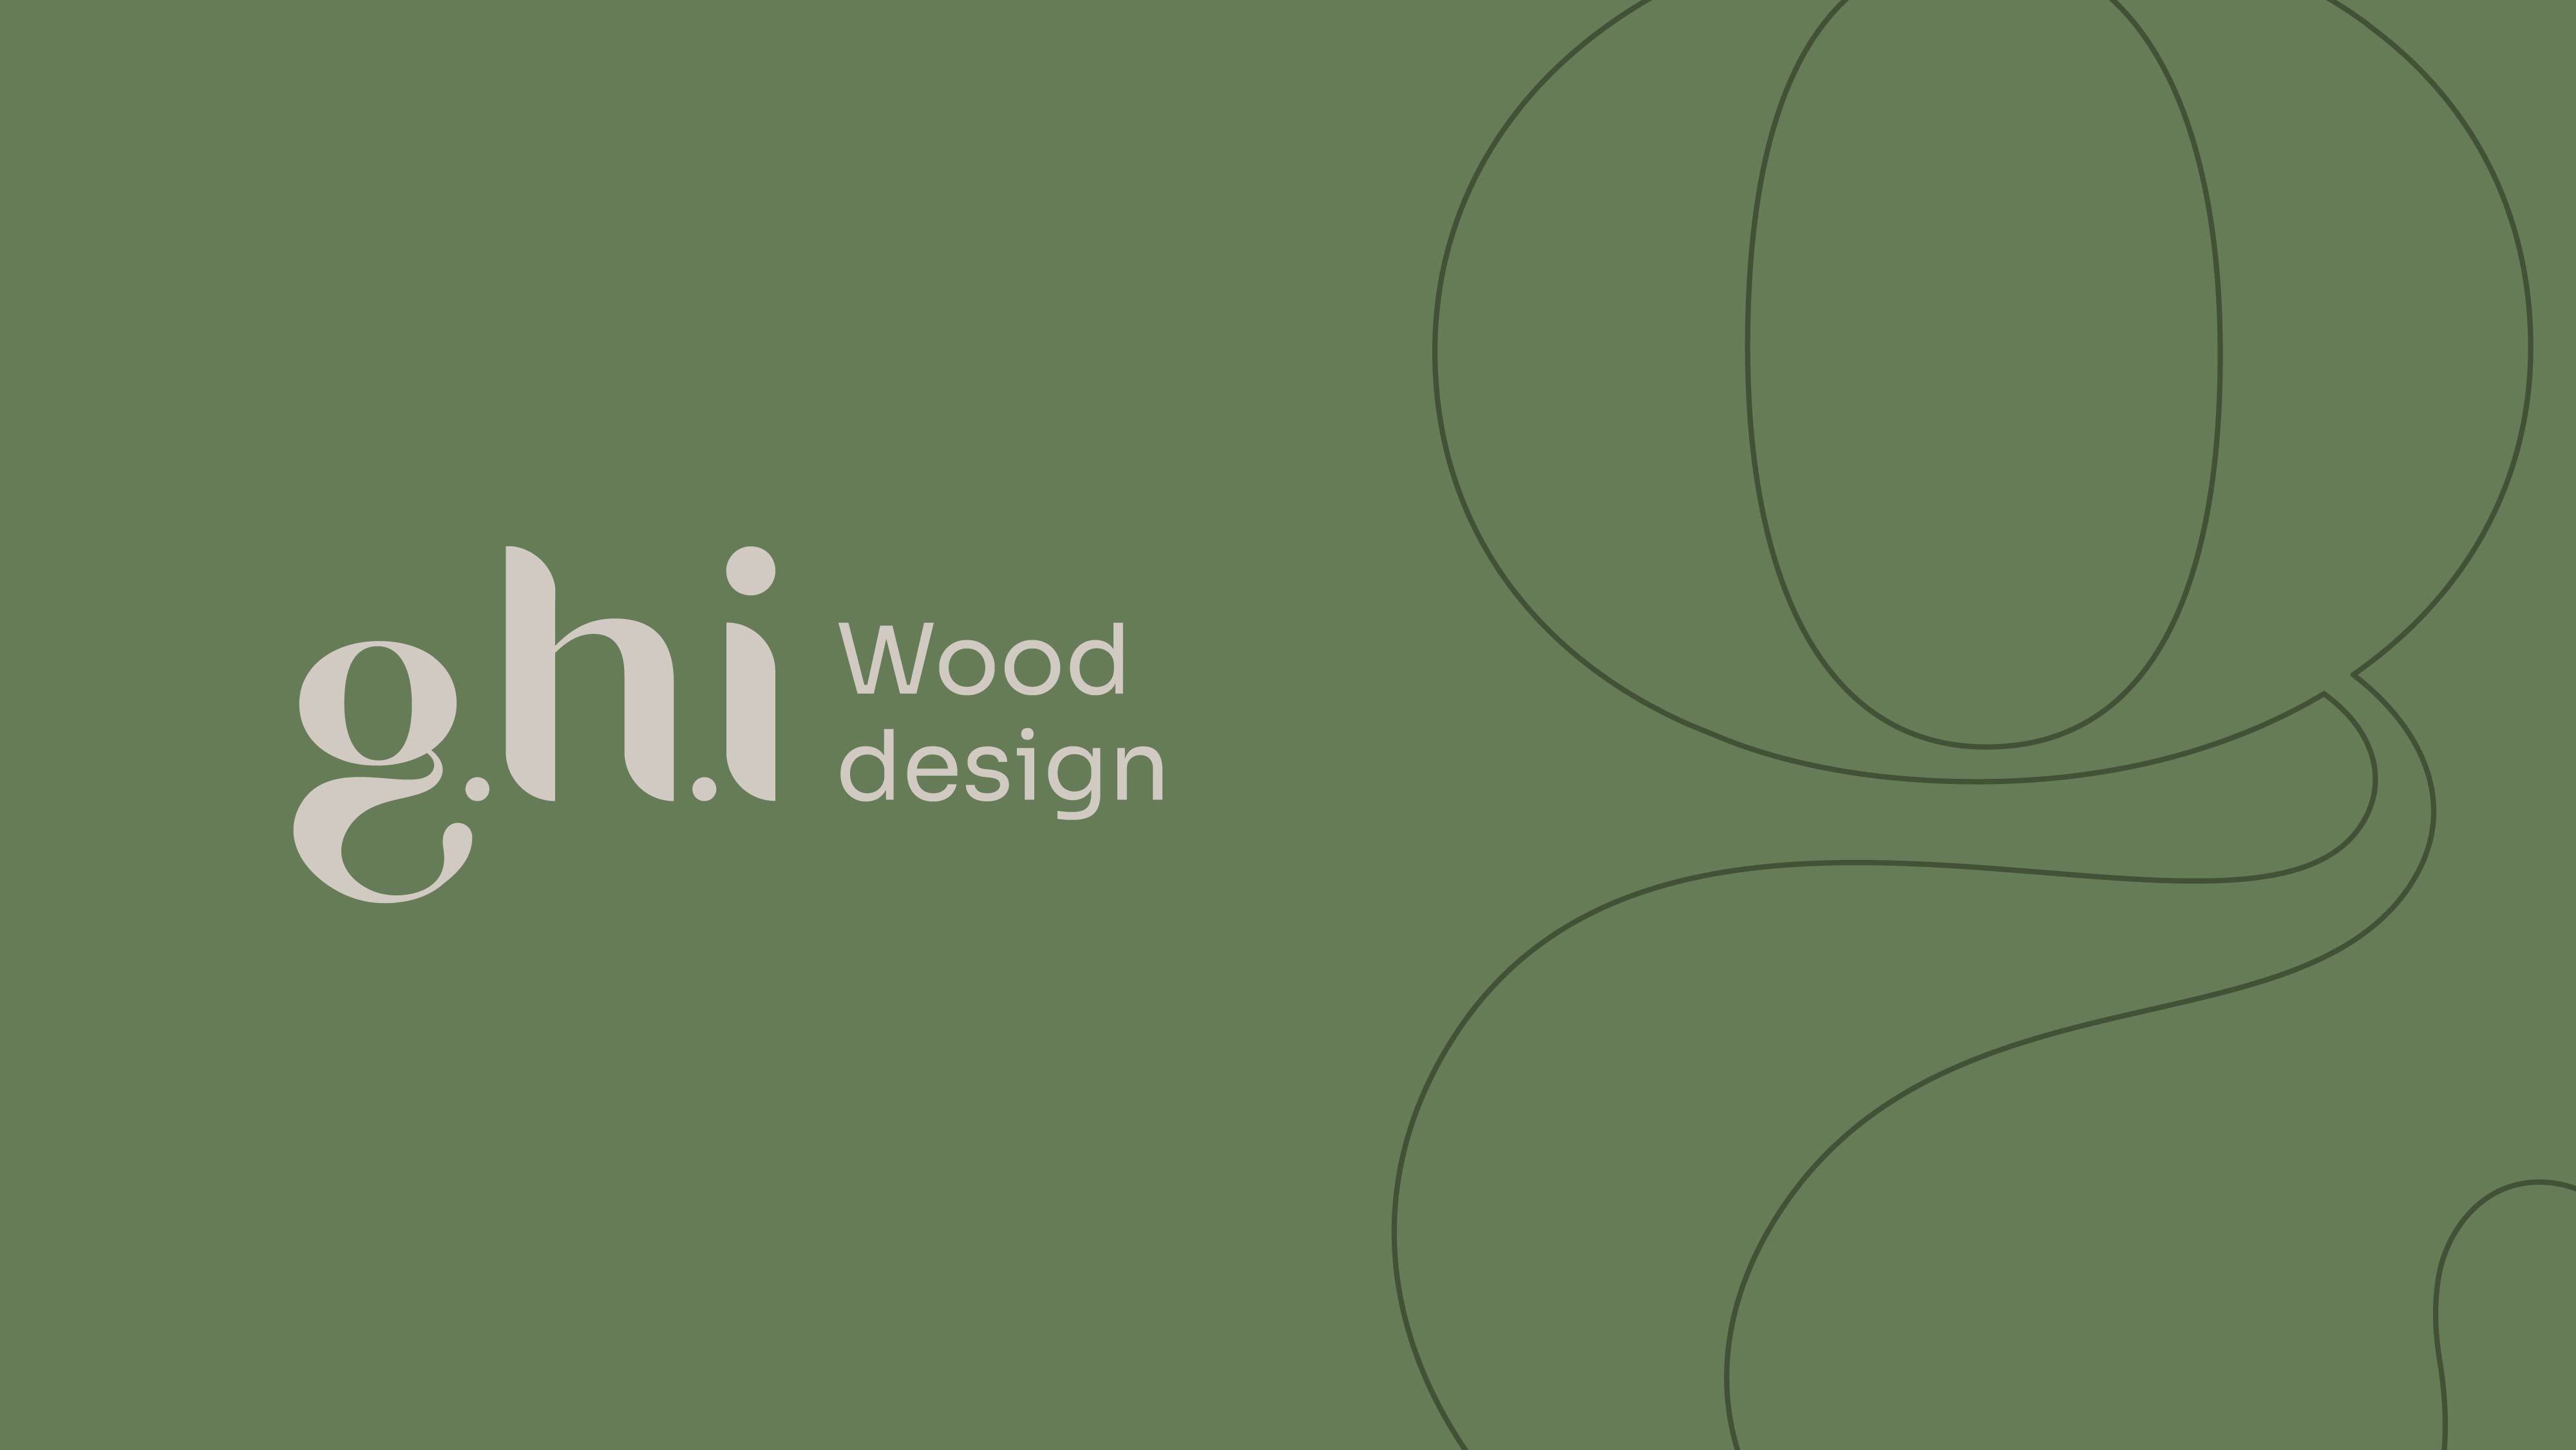 Quattrolinee Create Identity for Carpenter Shop G.h.i Wood Design